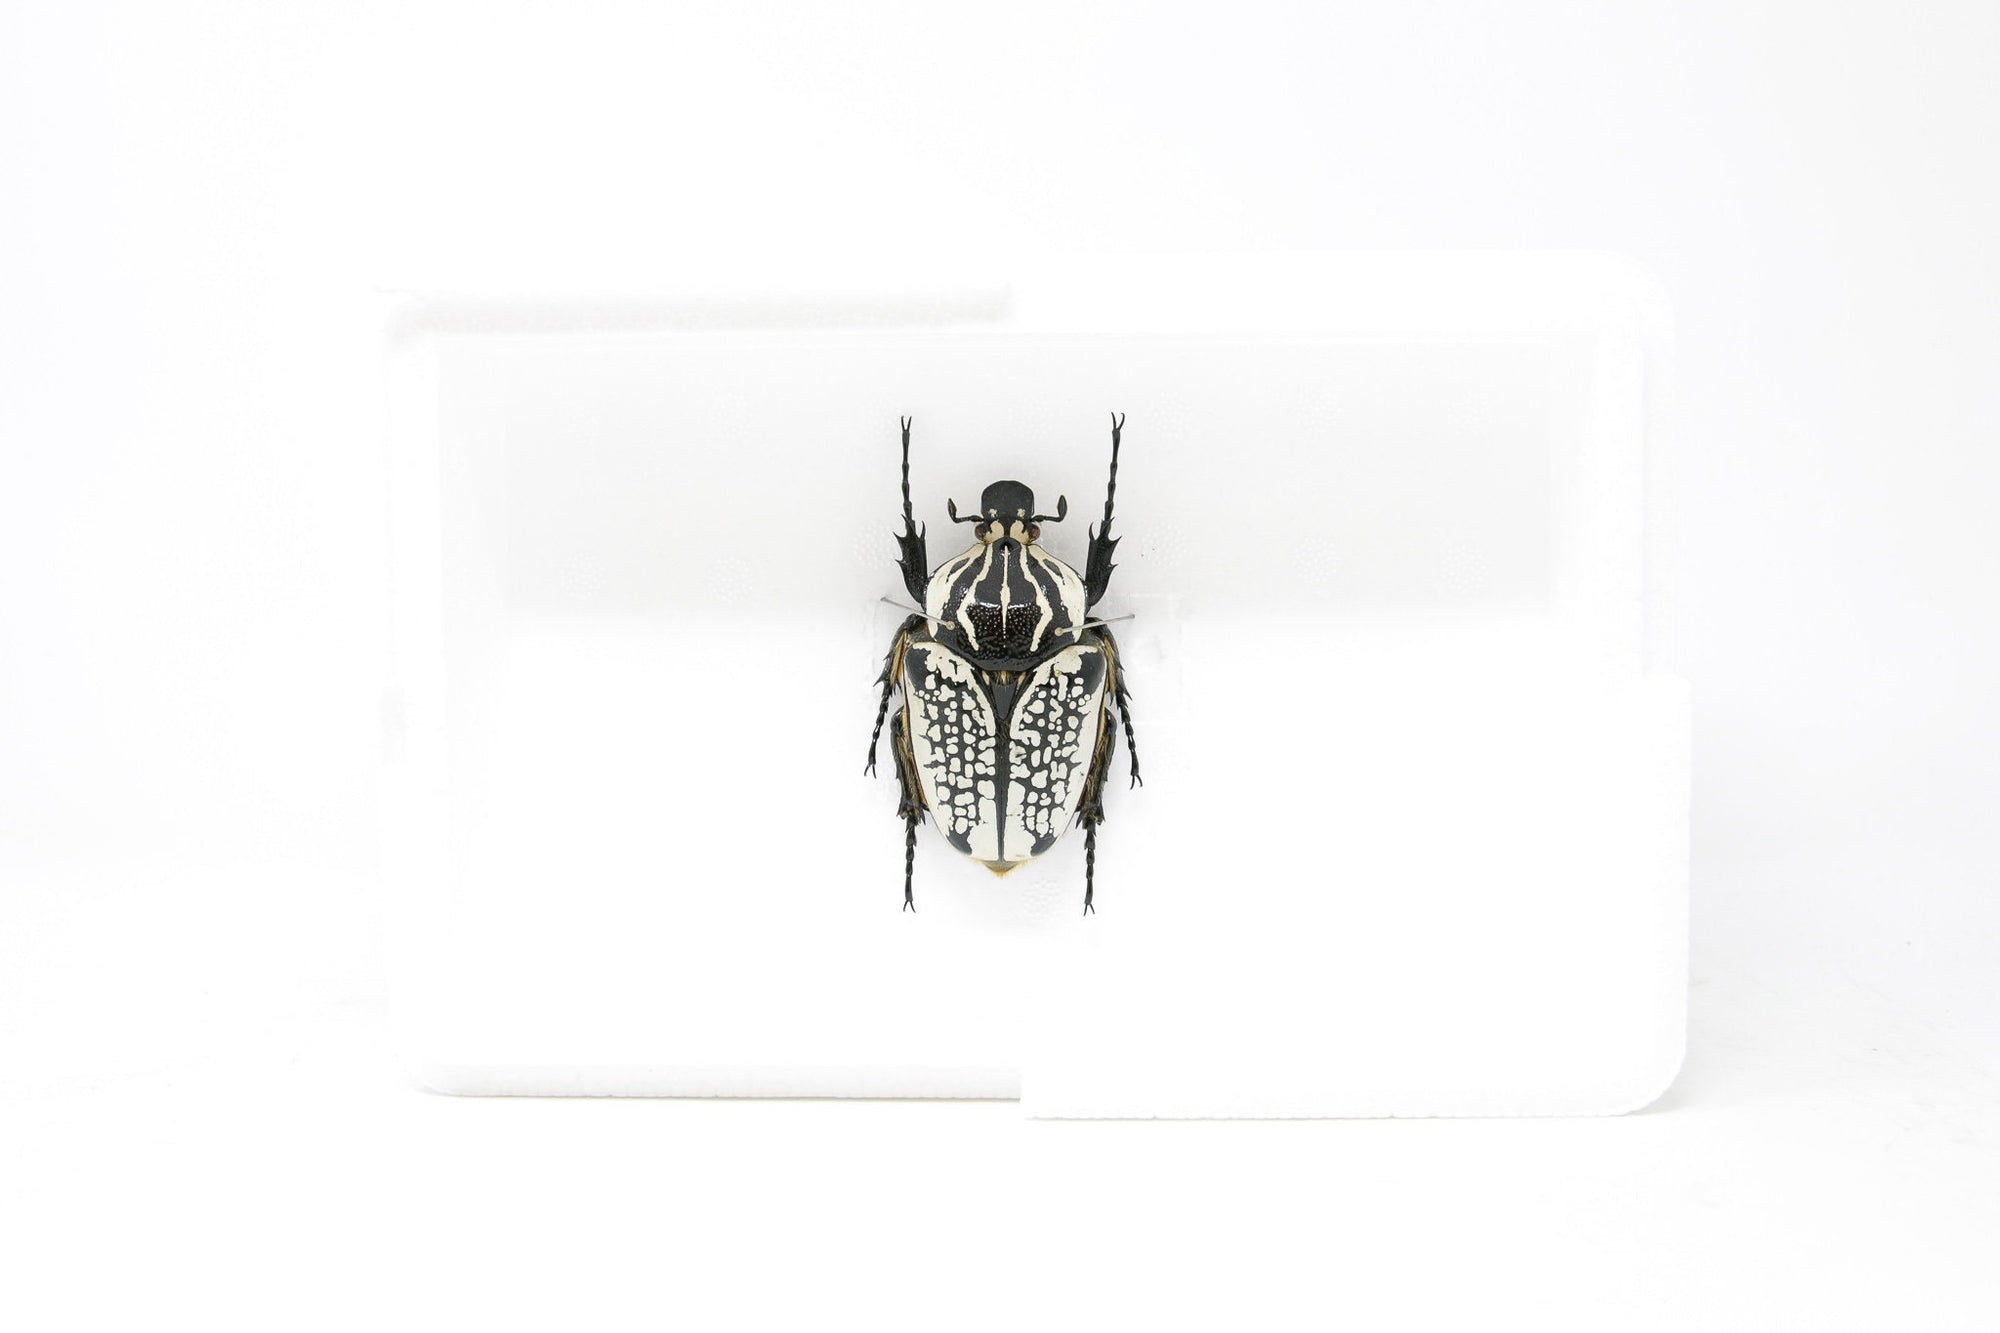 A Real Giant Goliath Beetle (Coleoptera) A1 Quality SET SPECIMENS, Entomology Set #SE42